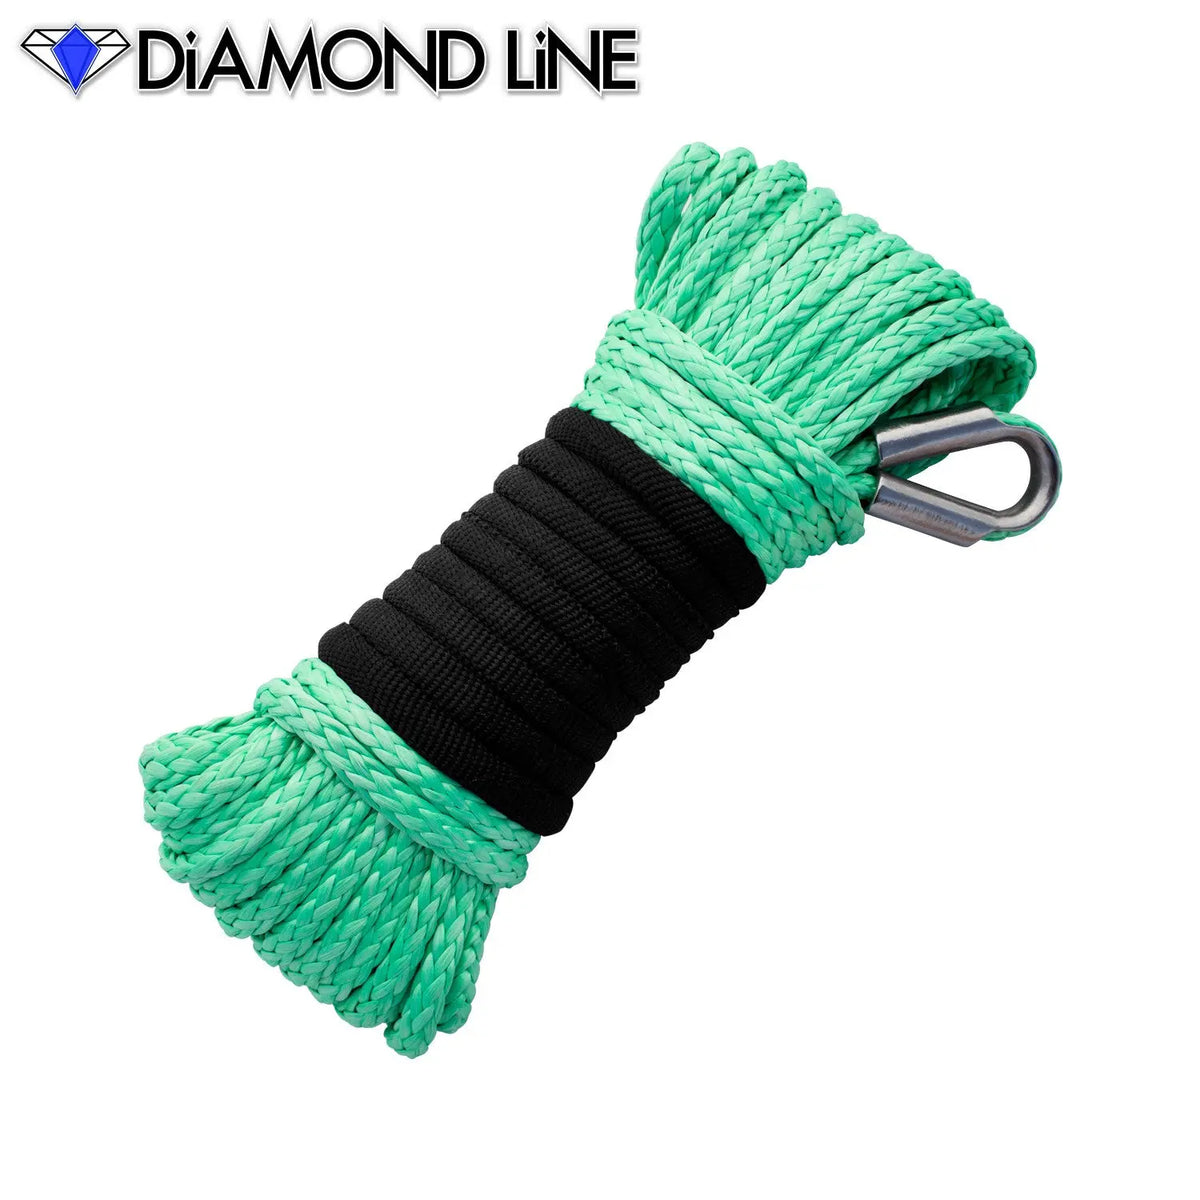 3/16" x 50' Diamond Line Winch Rope Mainline - Teal Green.